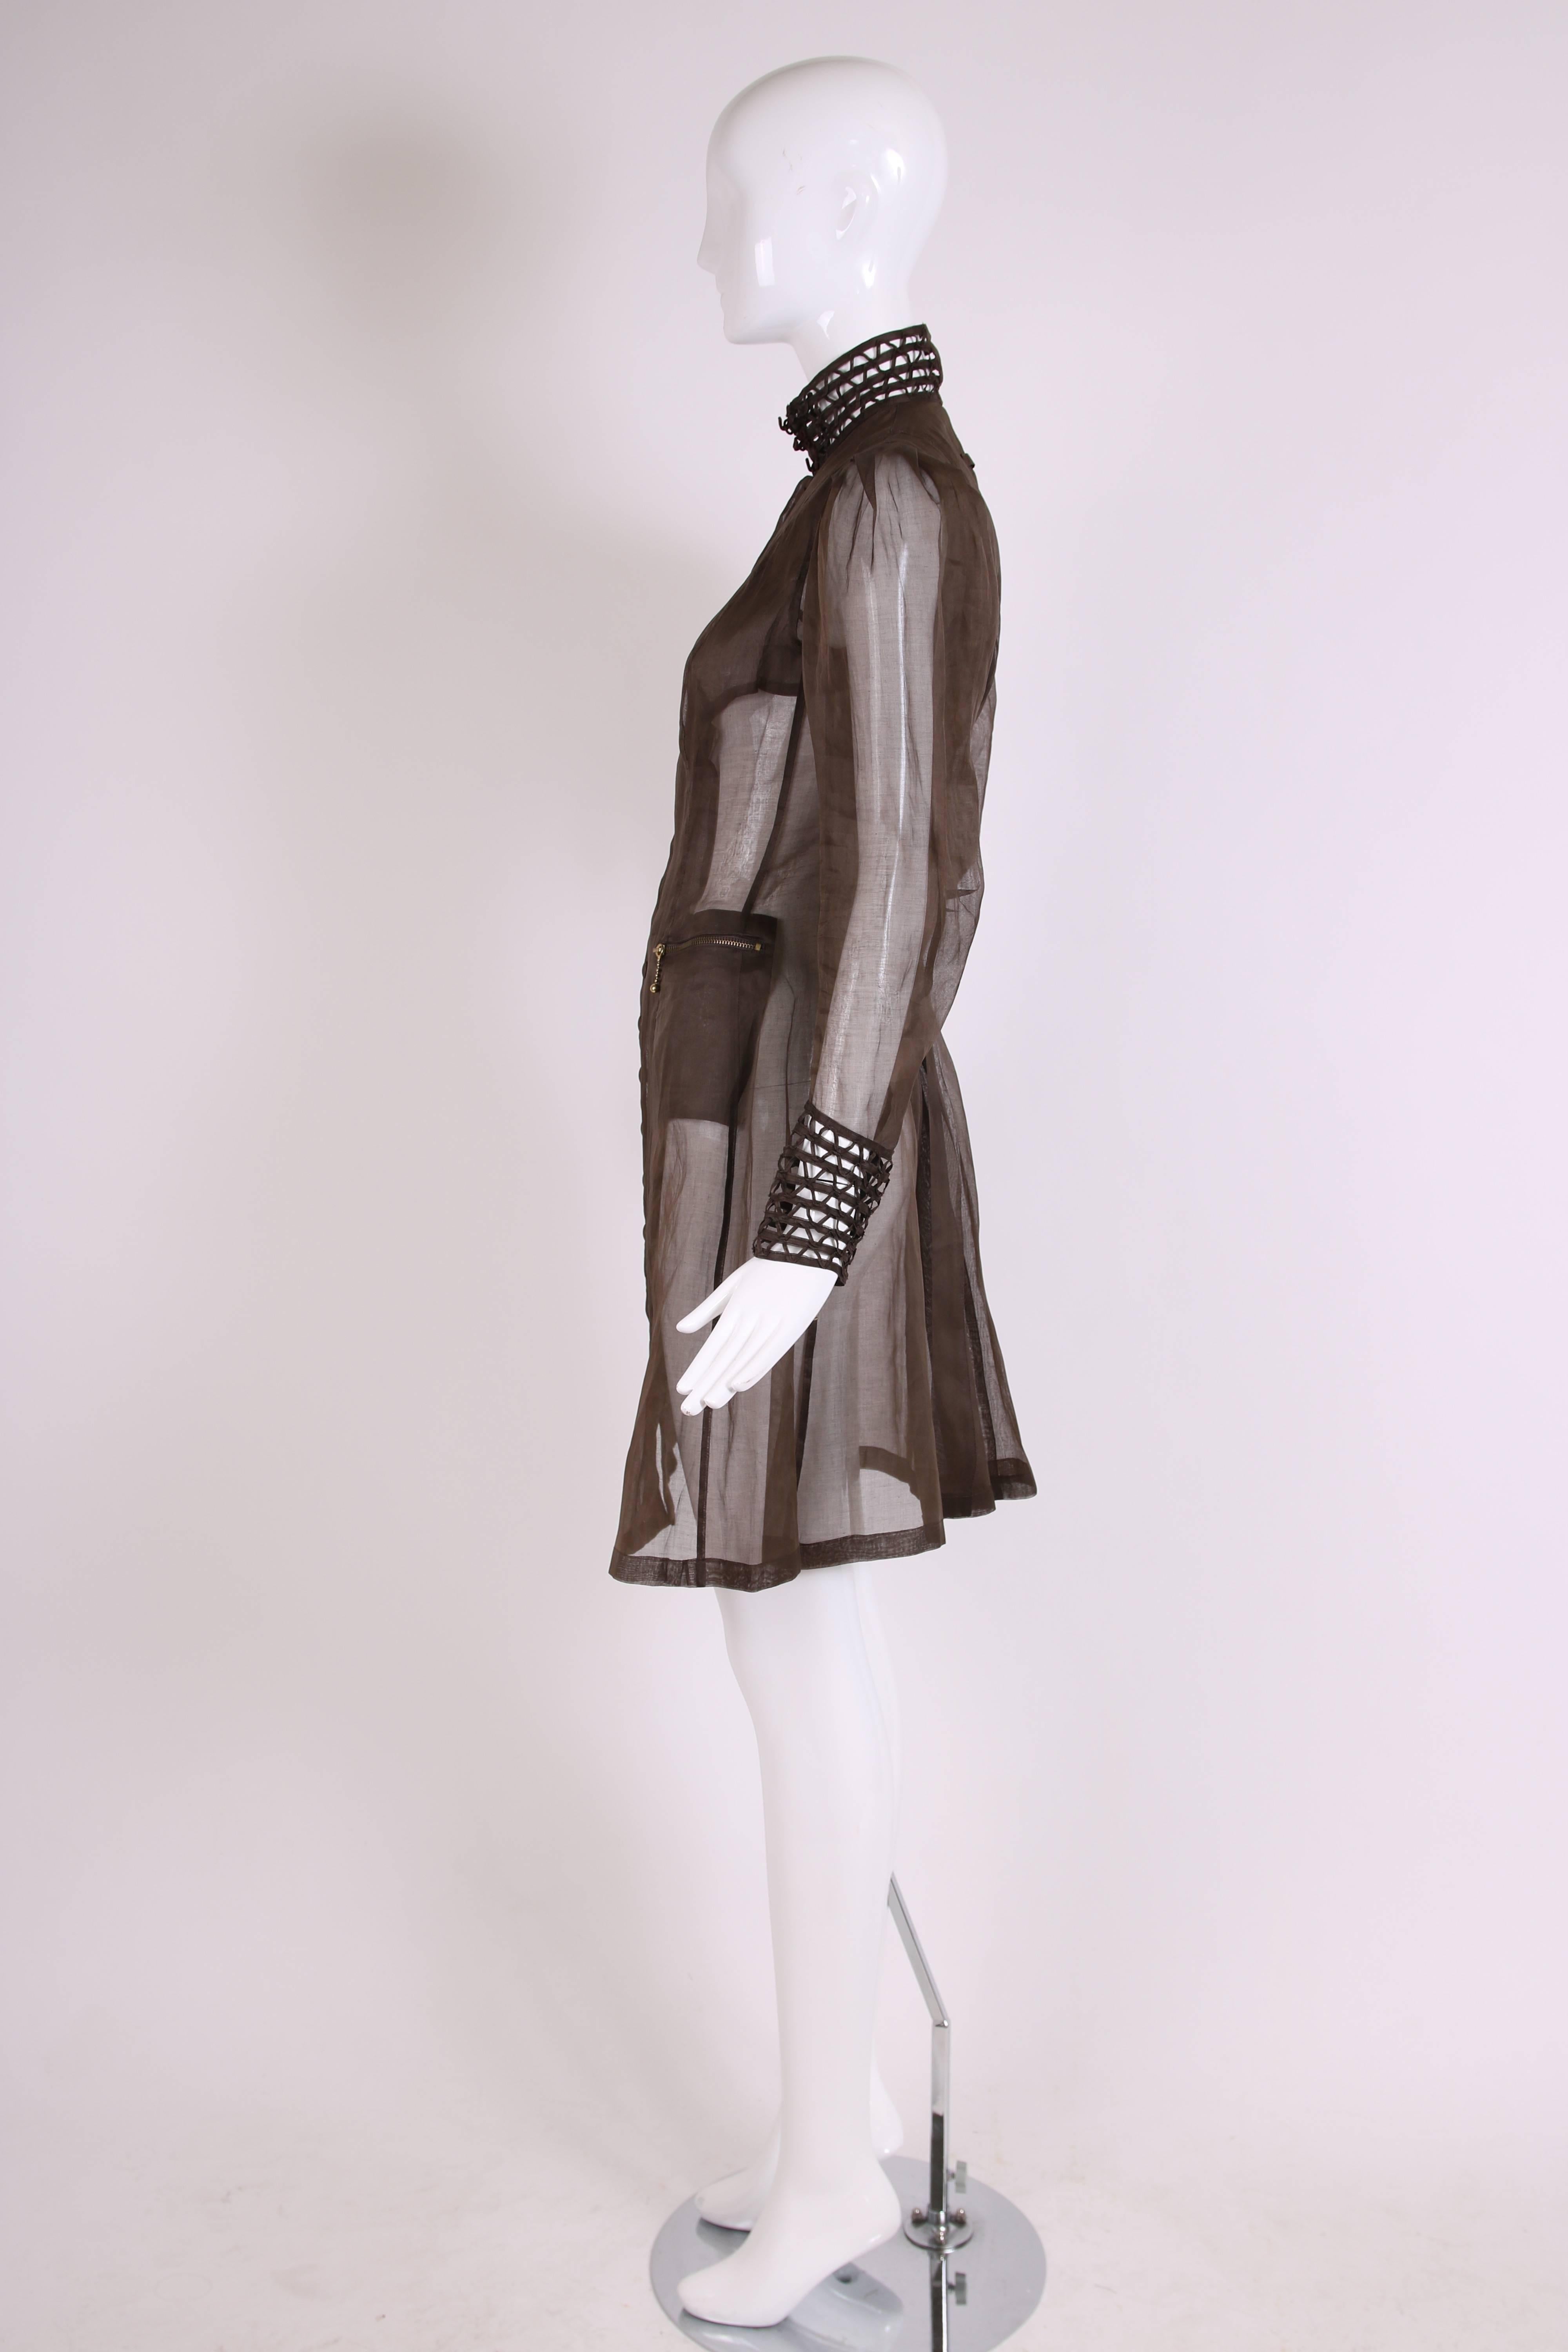 Black Jean Paul Gaultier Brown Sheer Silk Gazar Coat Dress c.1995-1998